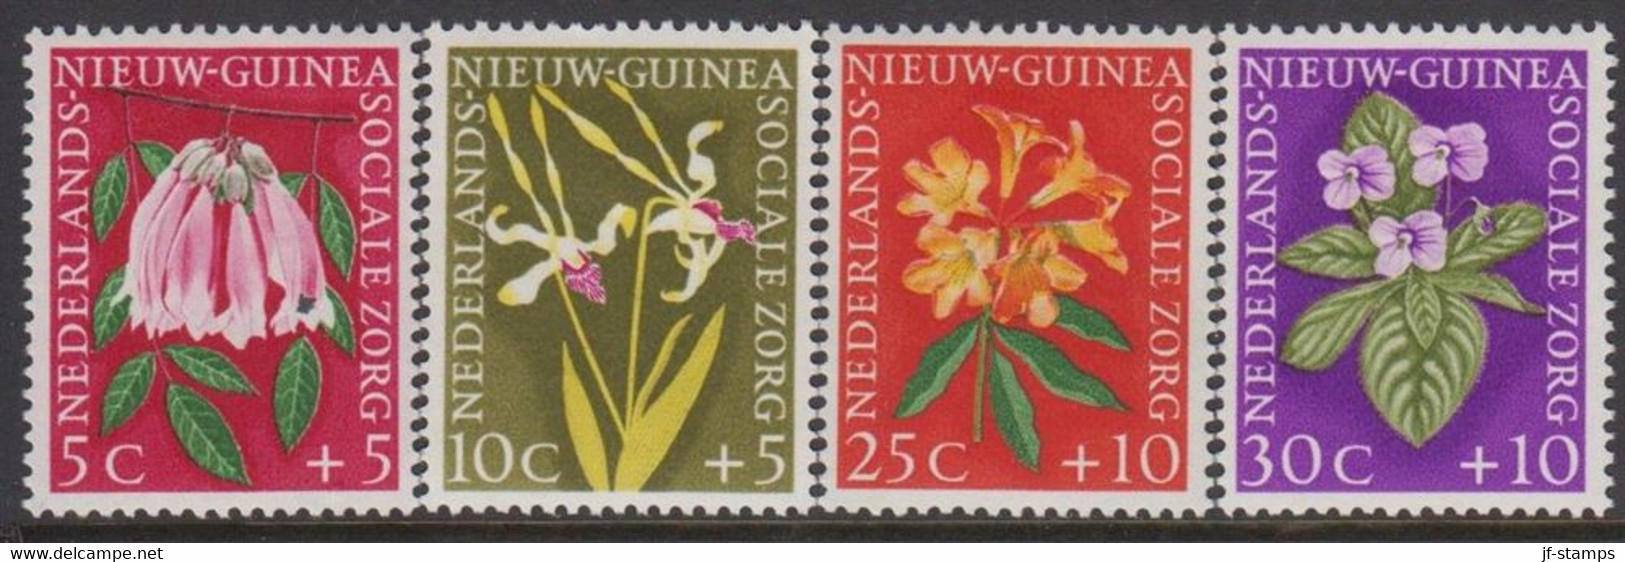 1959. NIEUW GUINEA. Flowers Complete Set Hinged.  - JF529305 - Niederländisch-Neuguinea